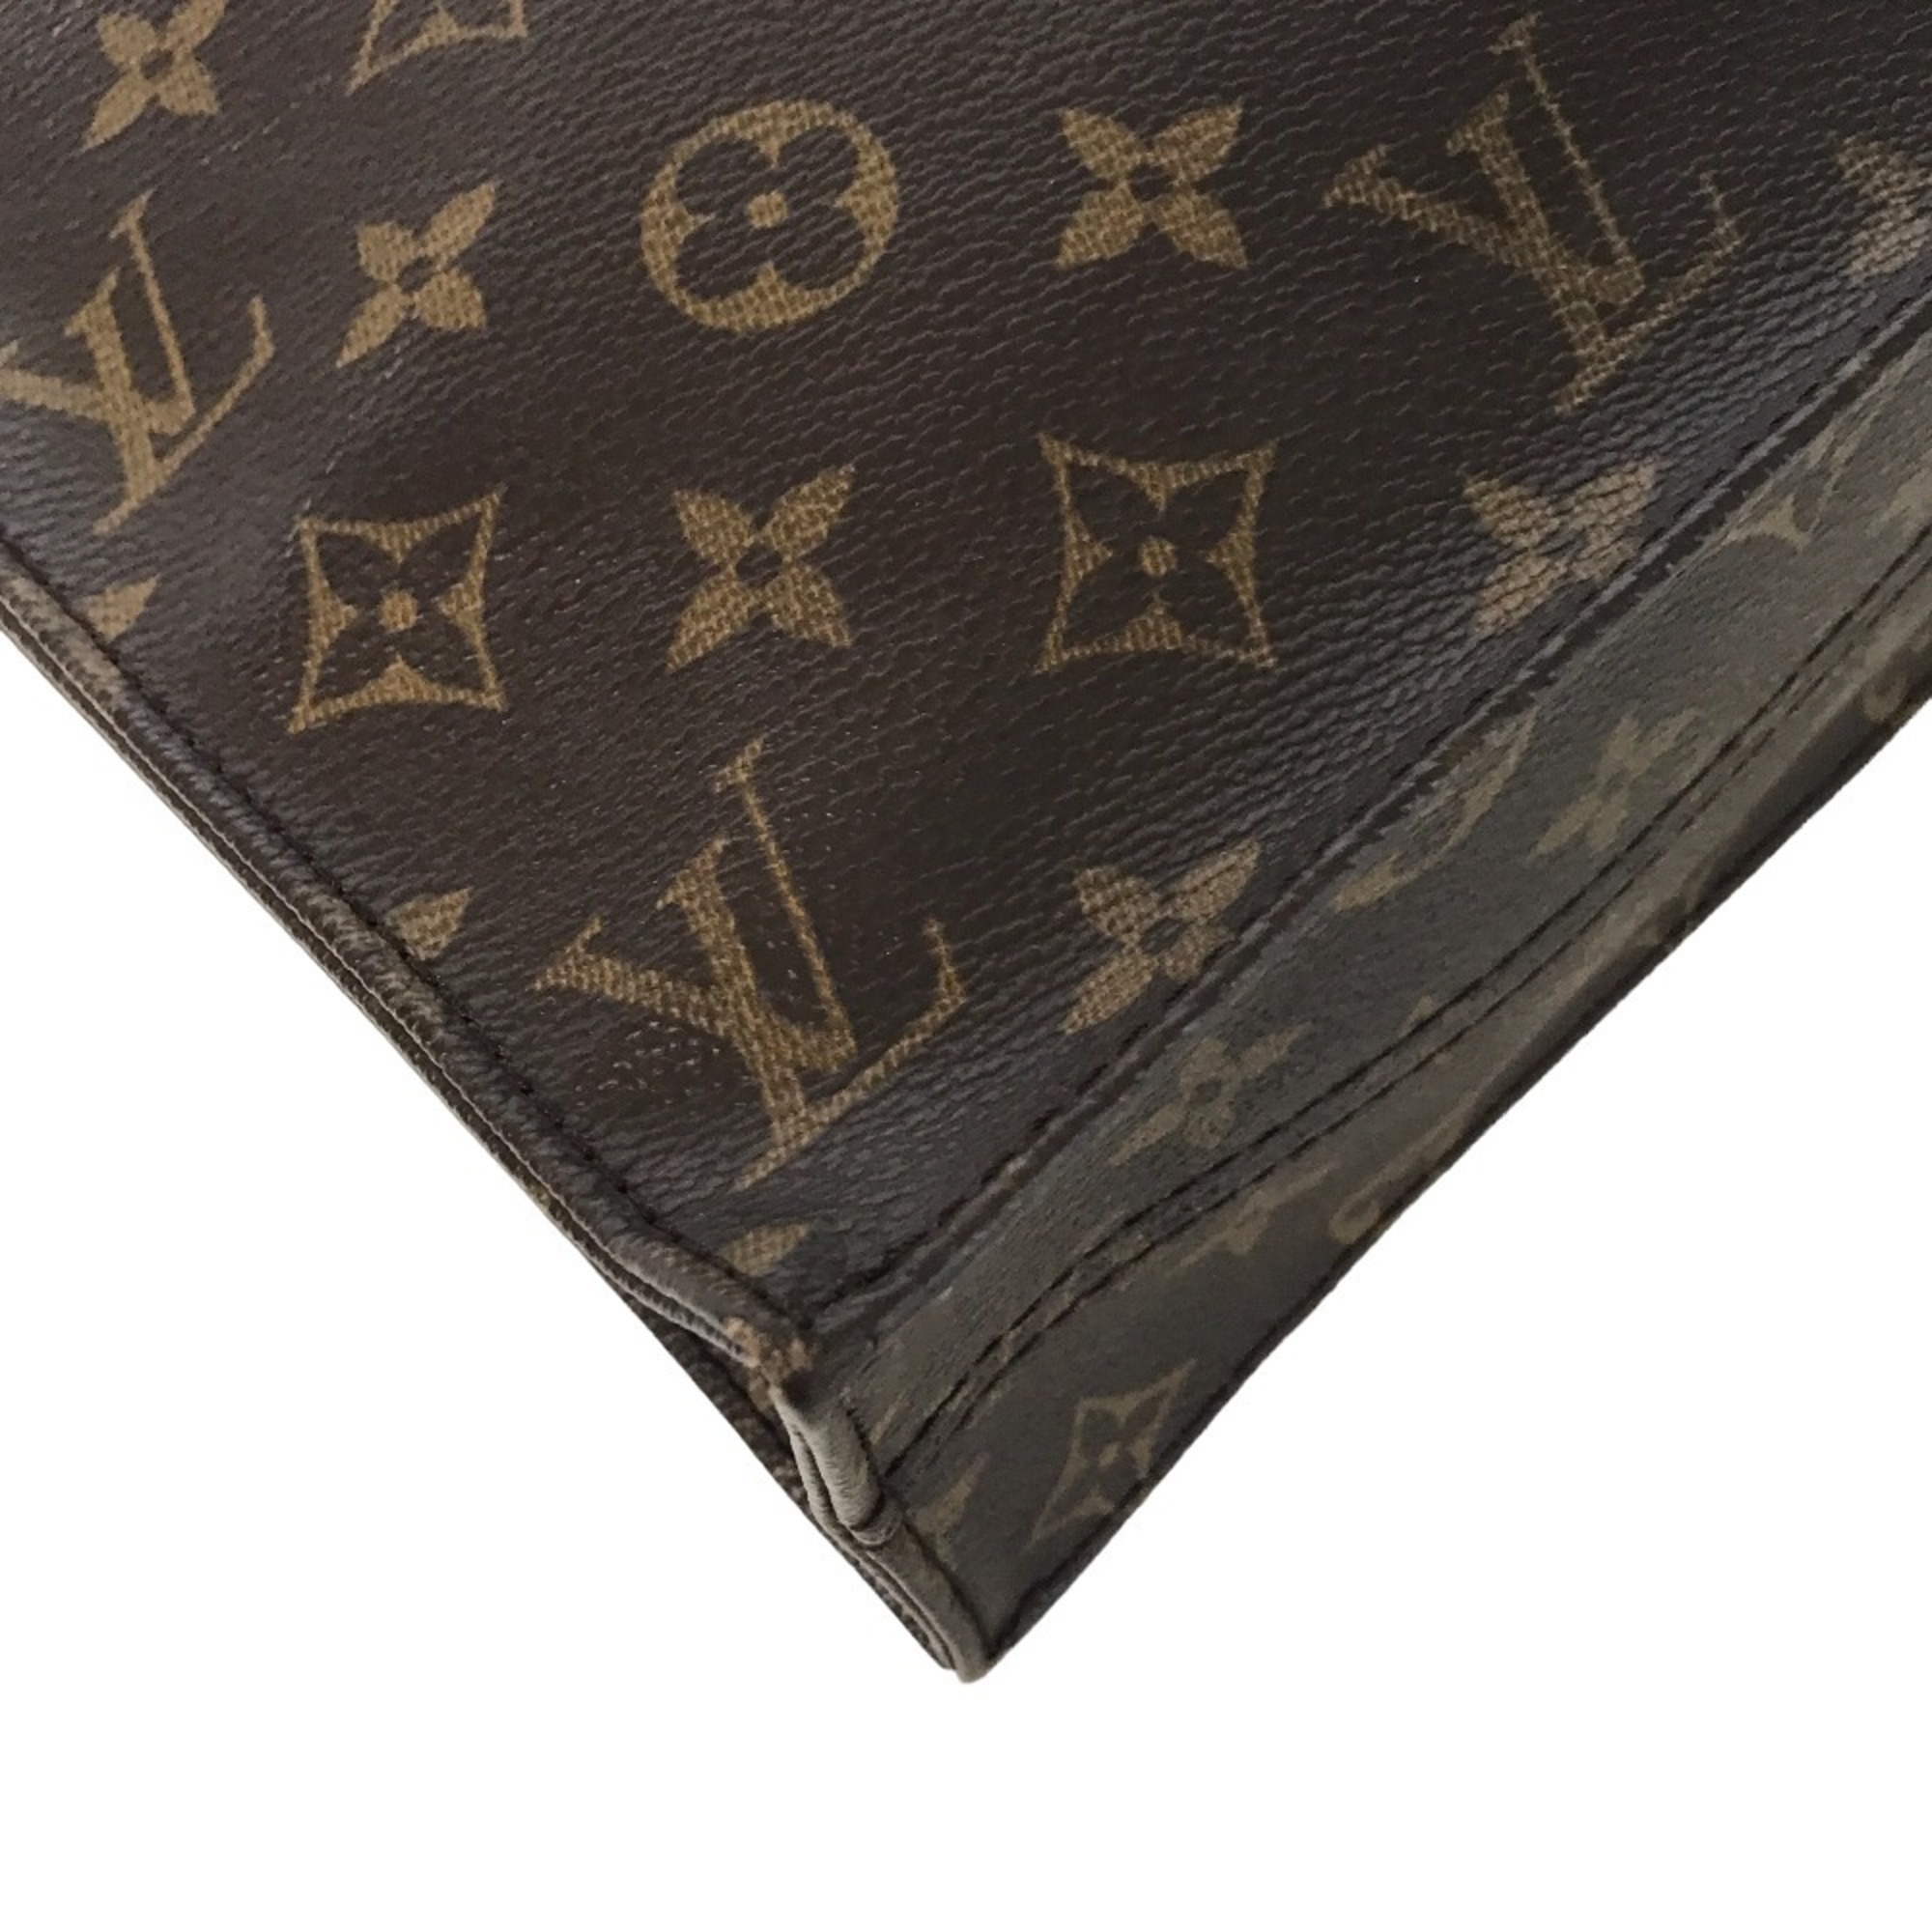 LOUIS VUITTON Louis Vuitton Sac Plat Tote Bag Handbag Women's Monogram Canvas Brown M51140